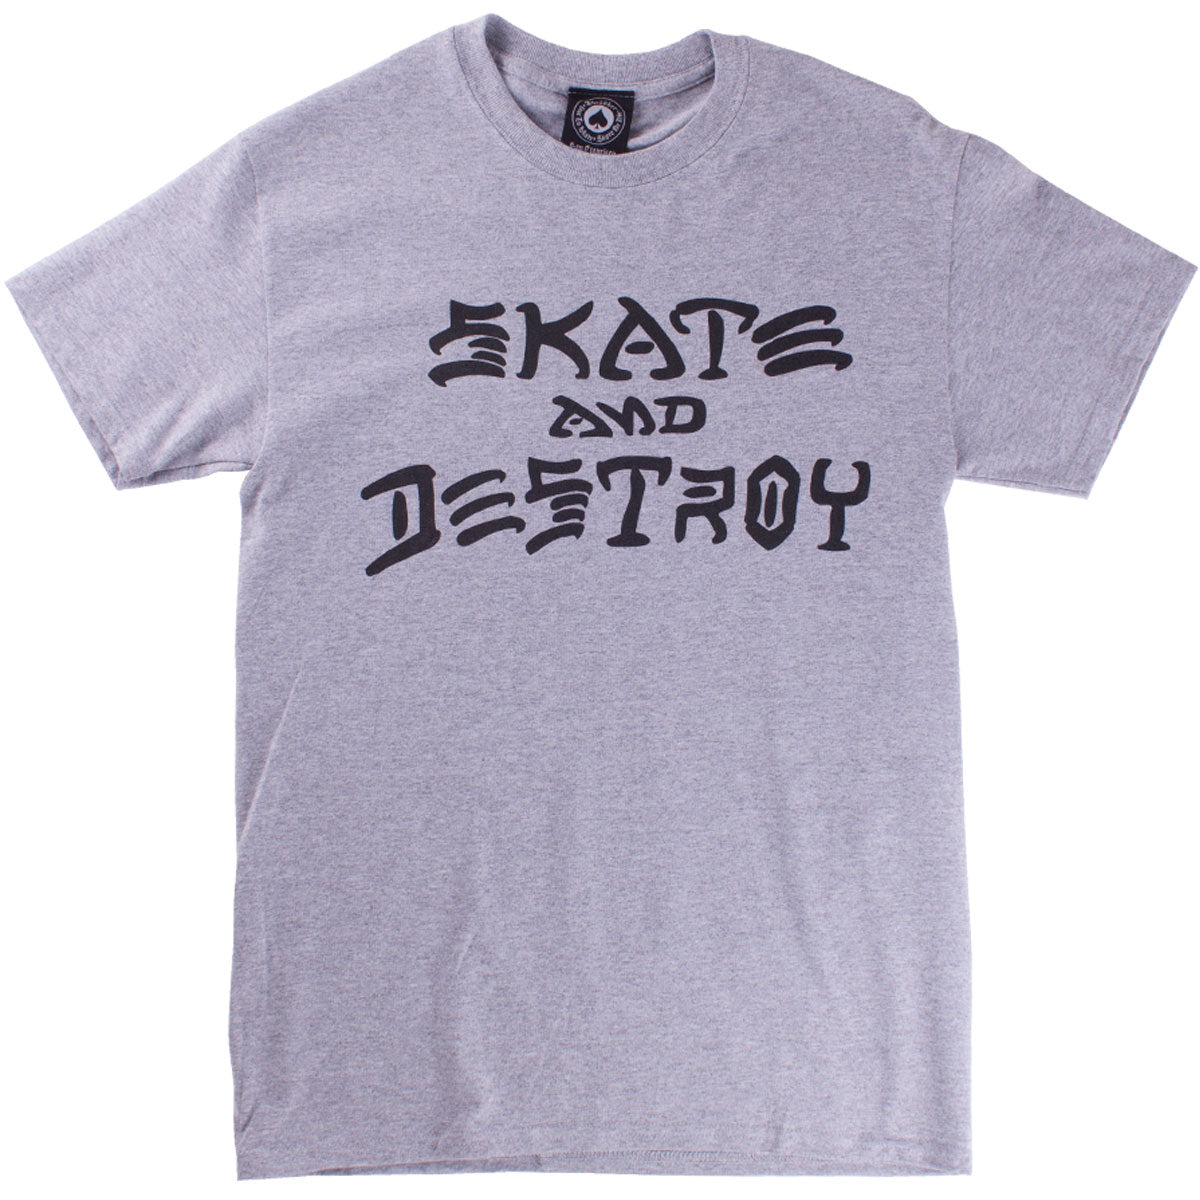 Thrasher Skate And Destroy T-Shirt - Grey image 1